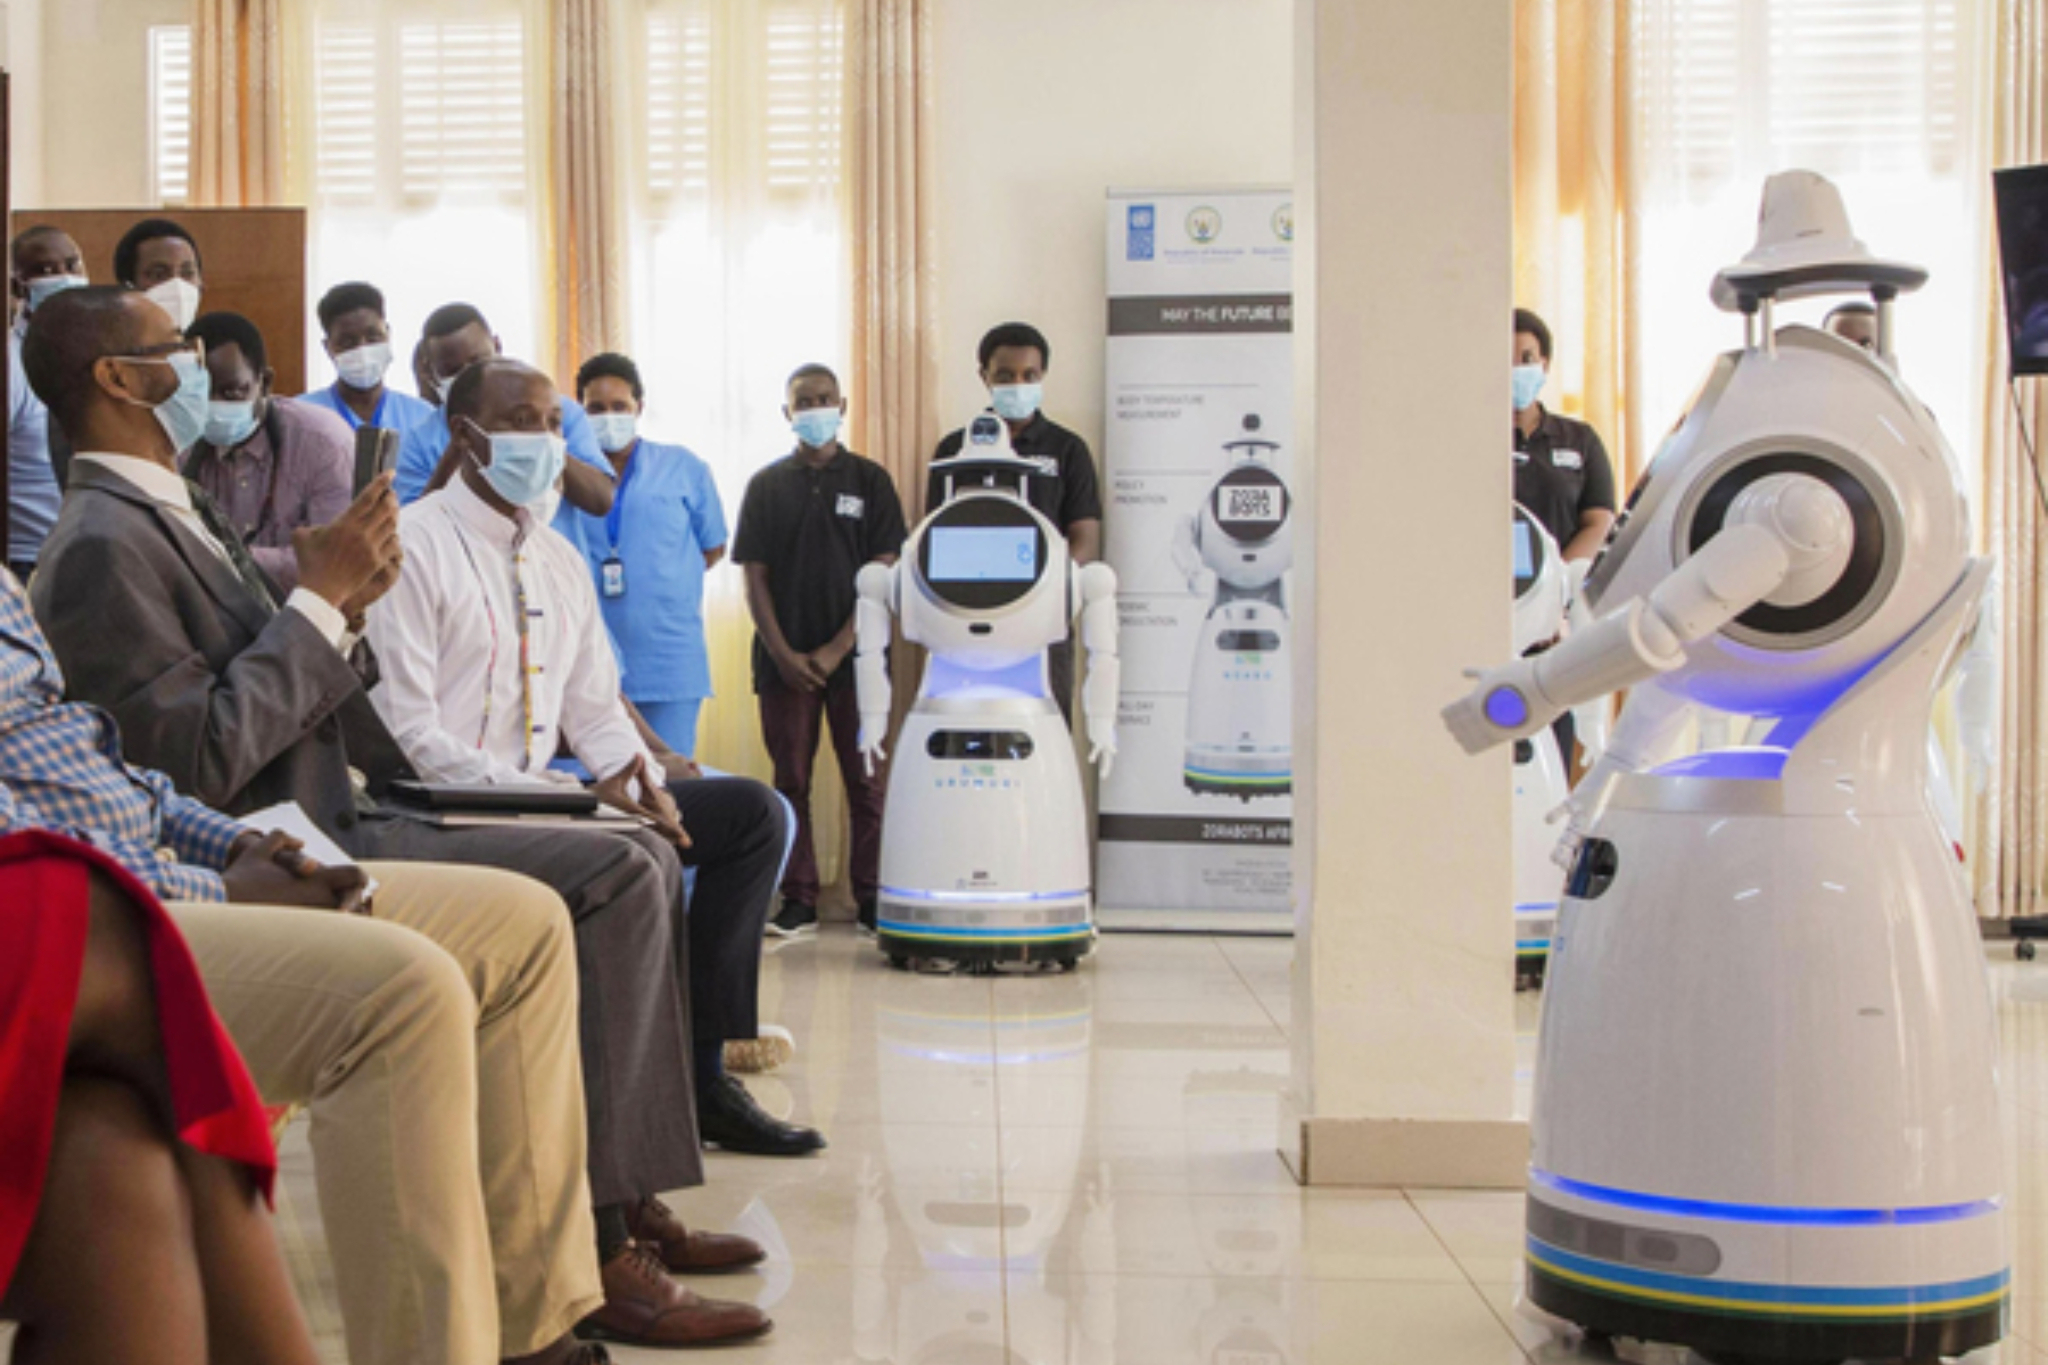 Rwanda Robot